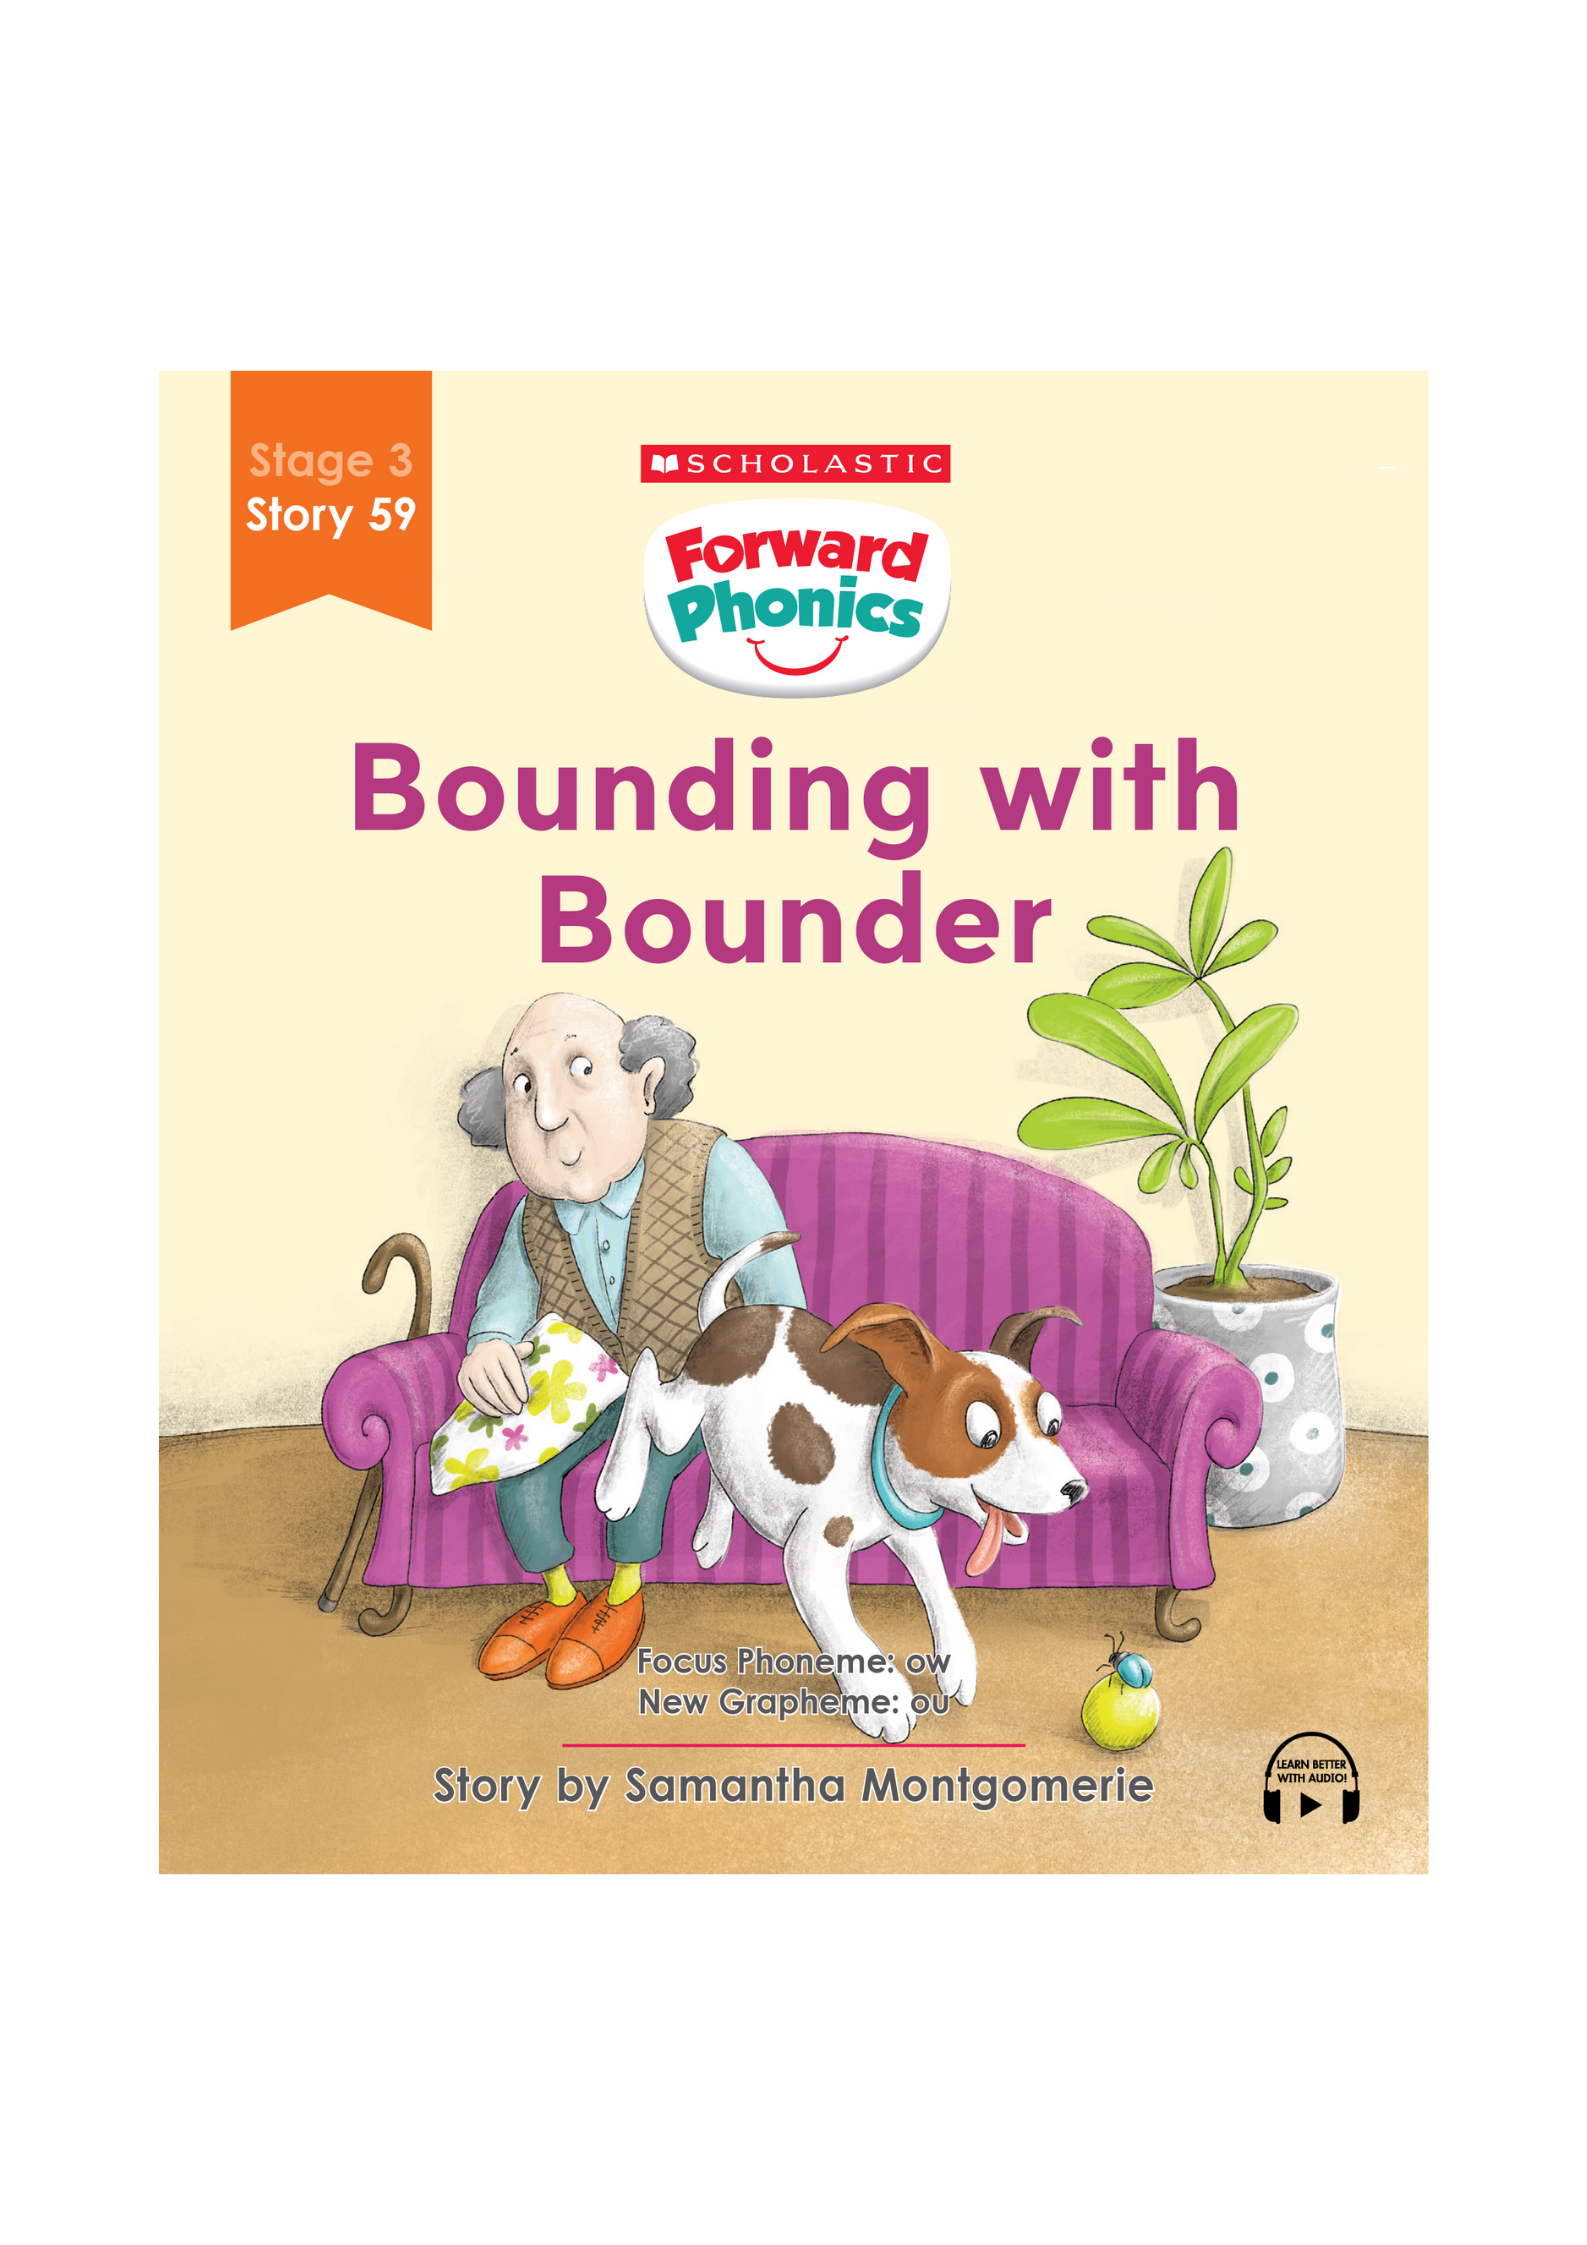 Forward Phonics #59: Bounding with Bounder